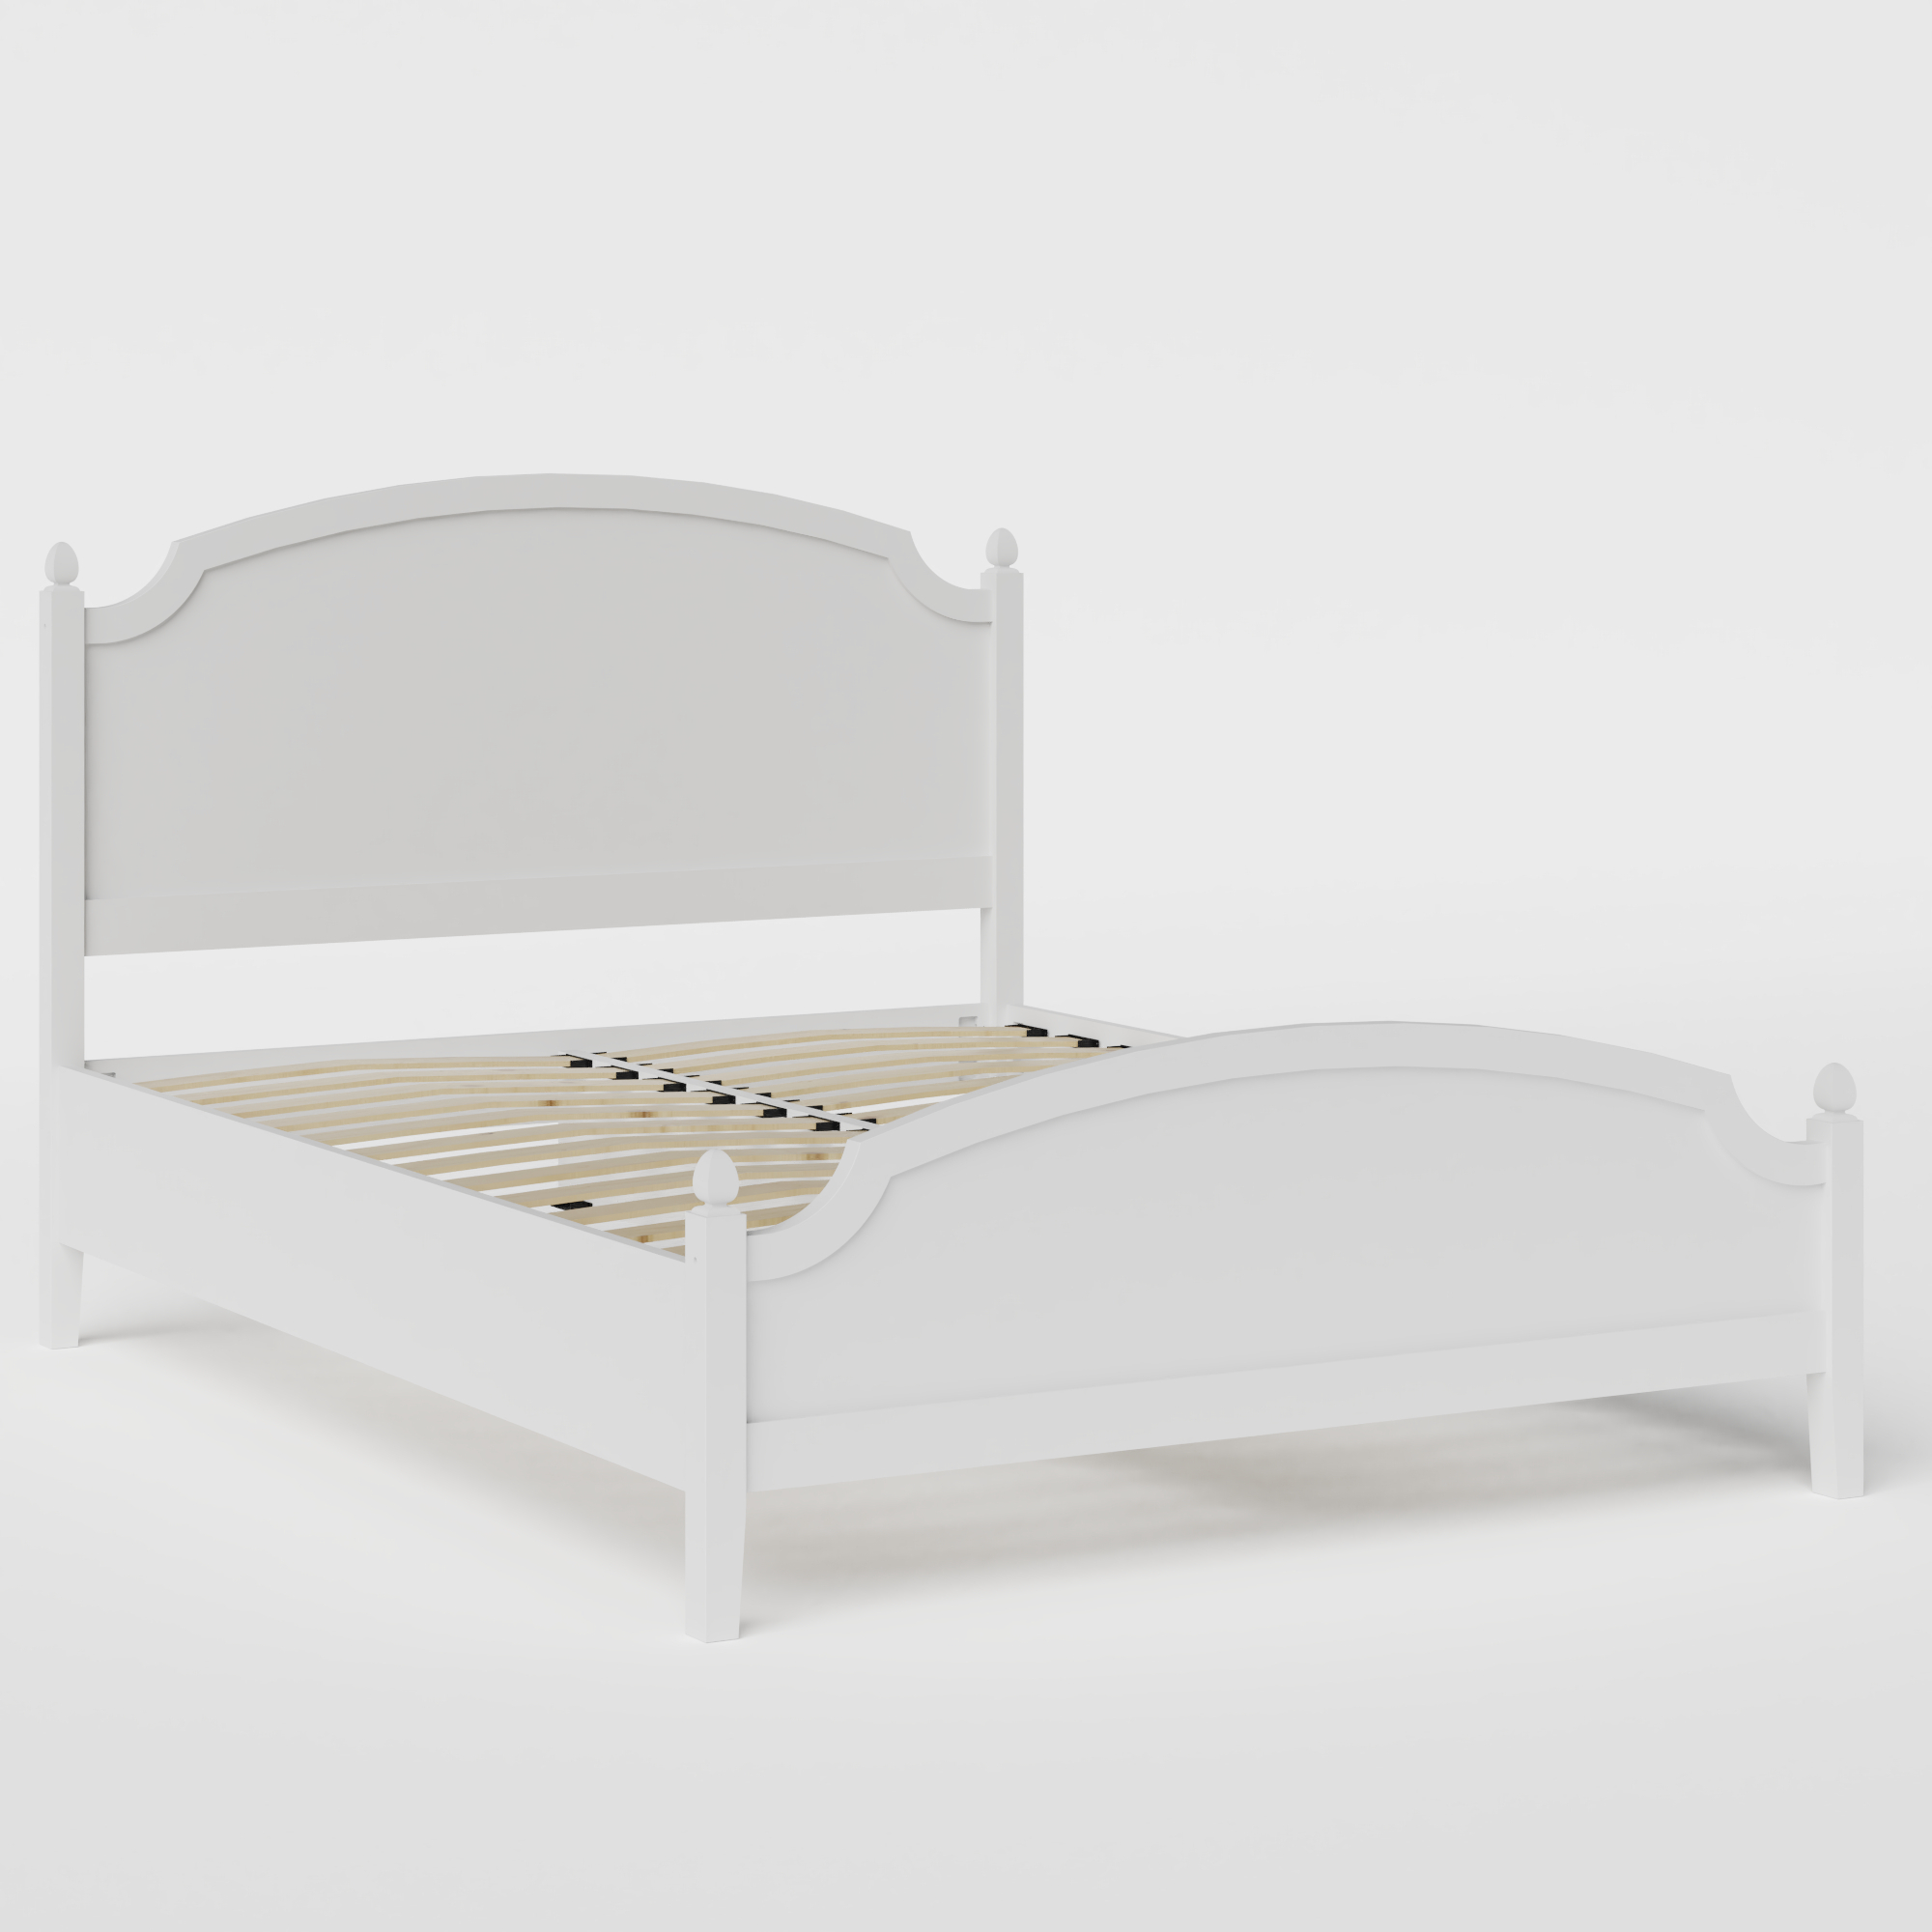 Kipling Low Footend Painted painted wood bed in white